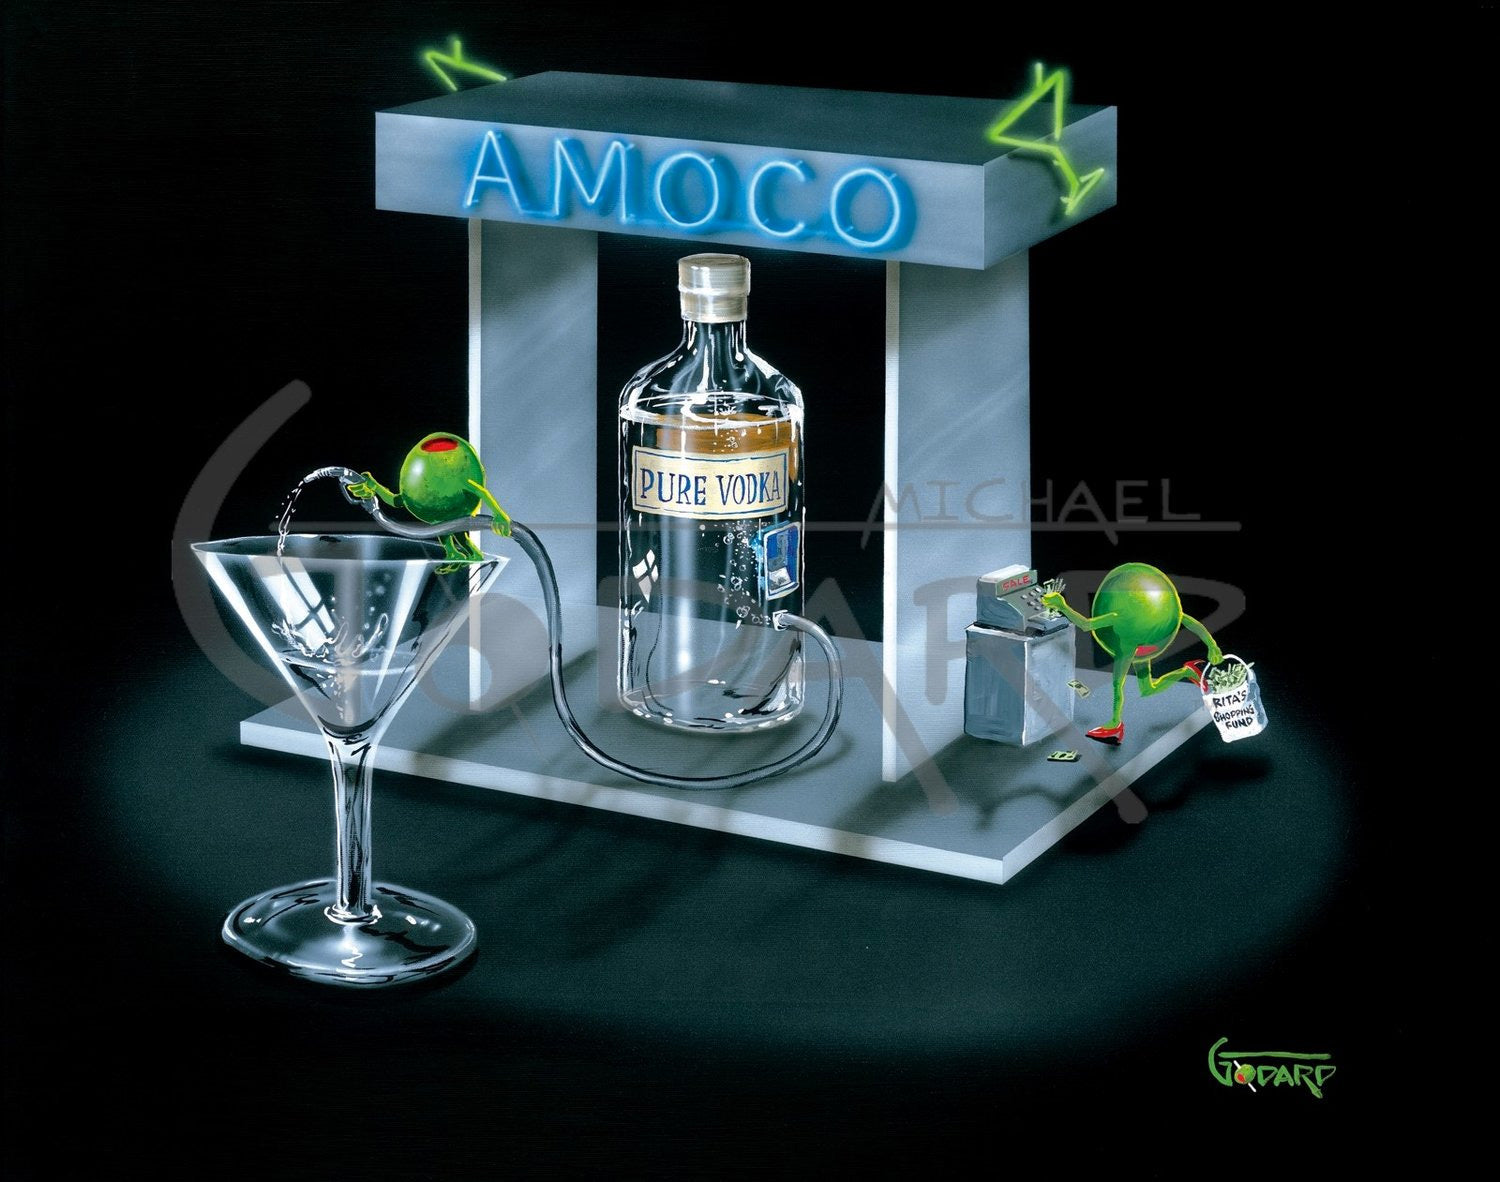 Michael Godard "Amoco" Limited Edition Canvas Giclee